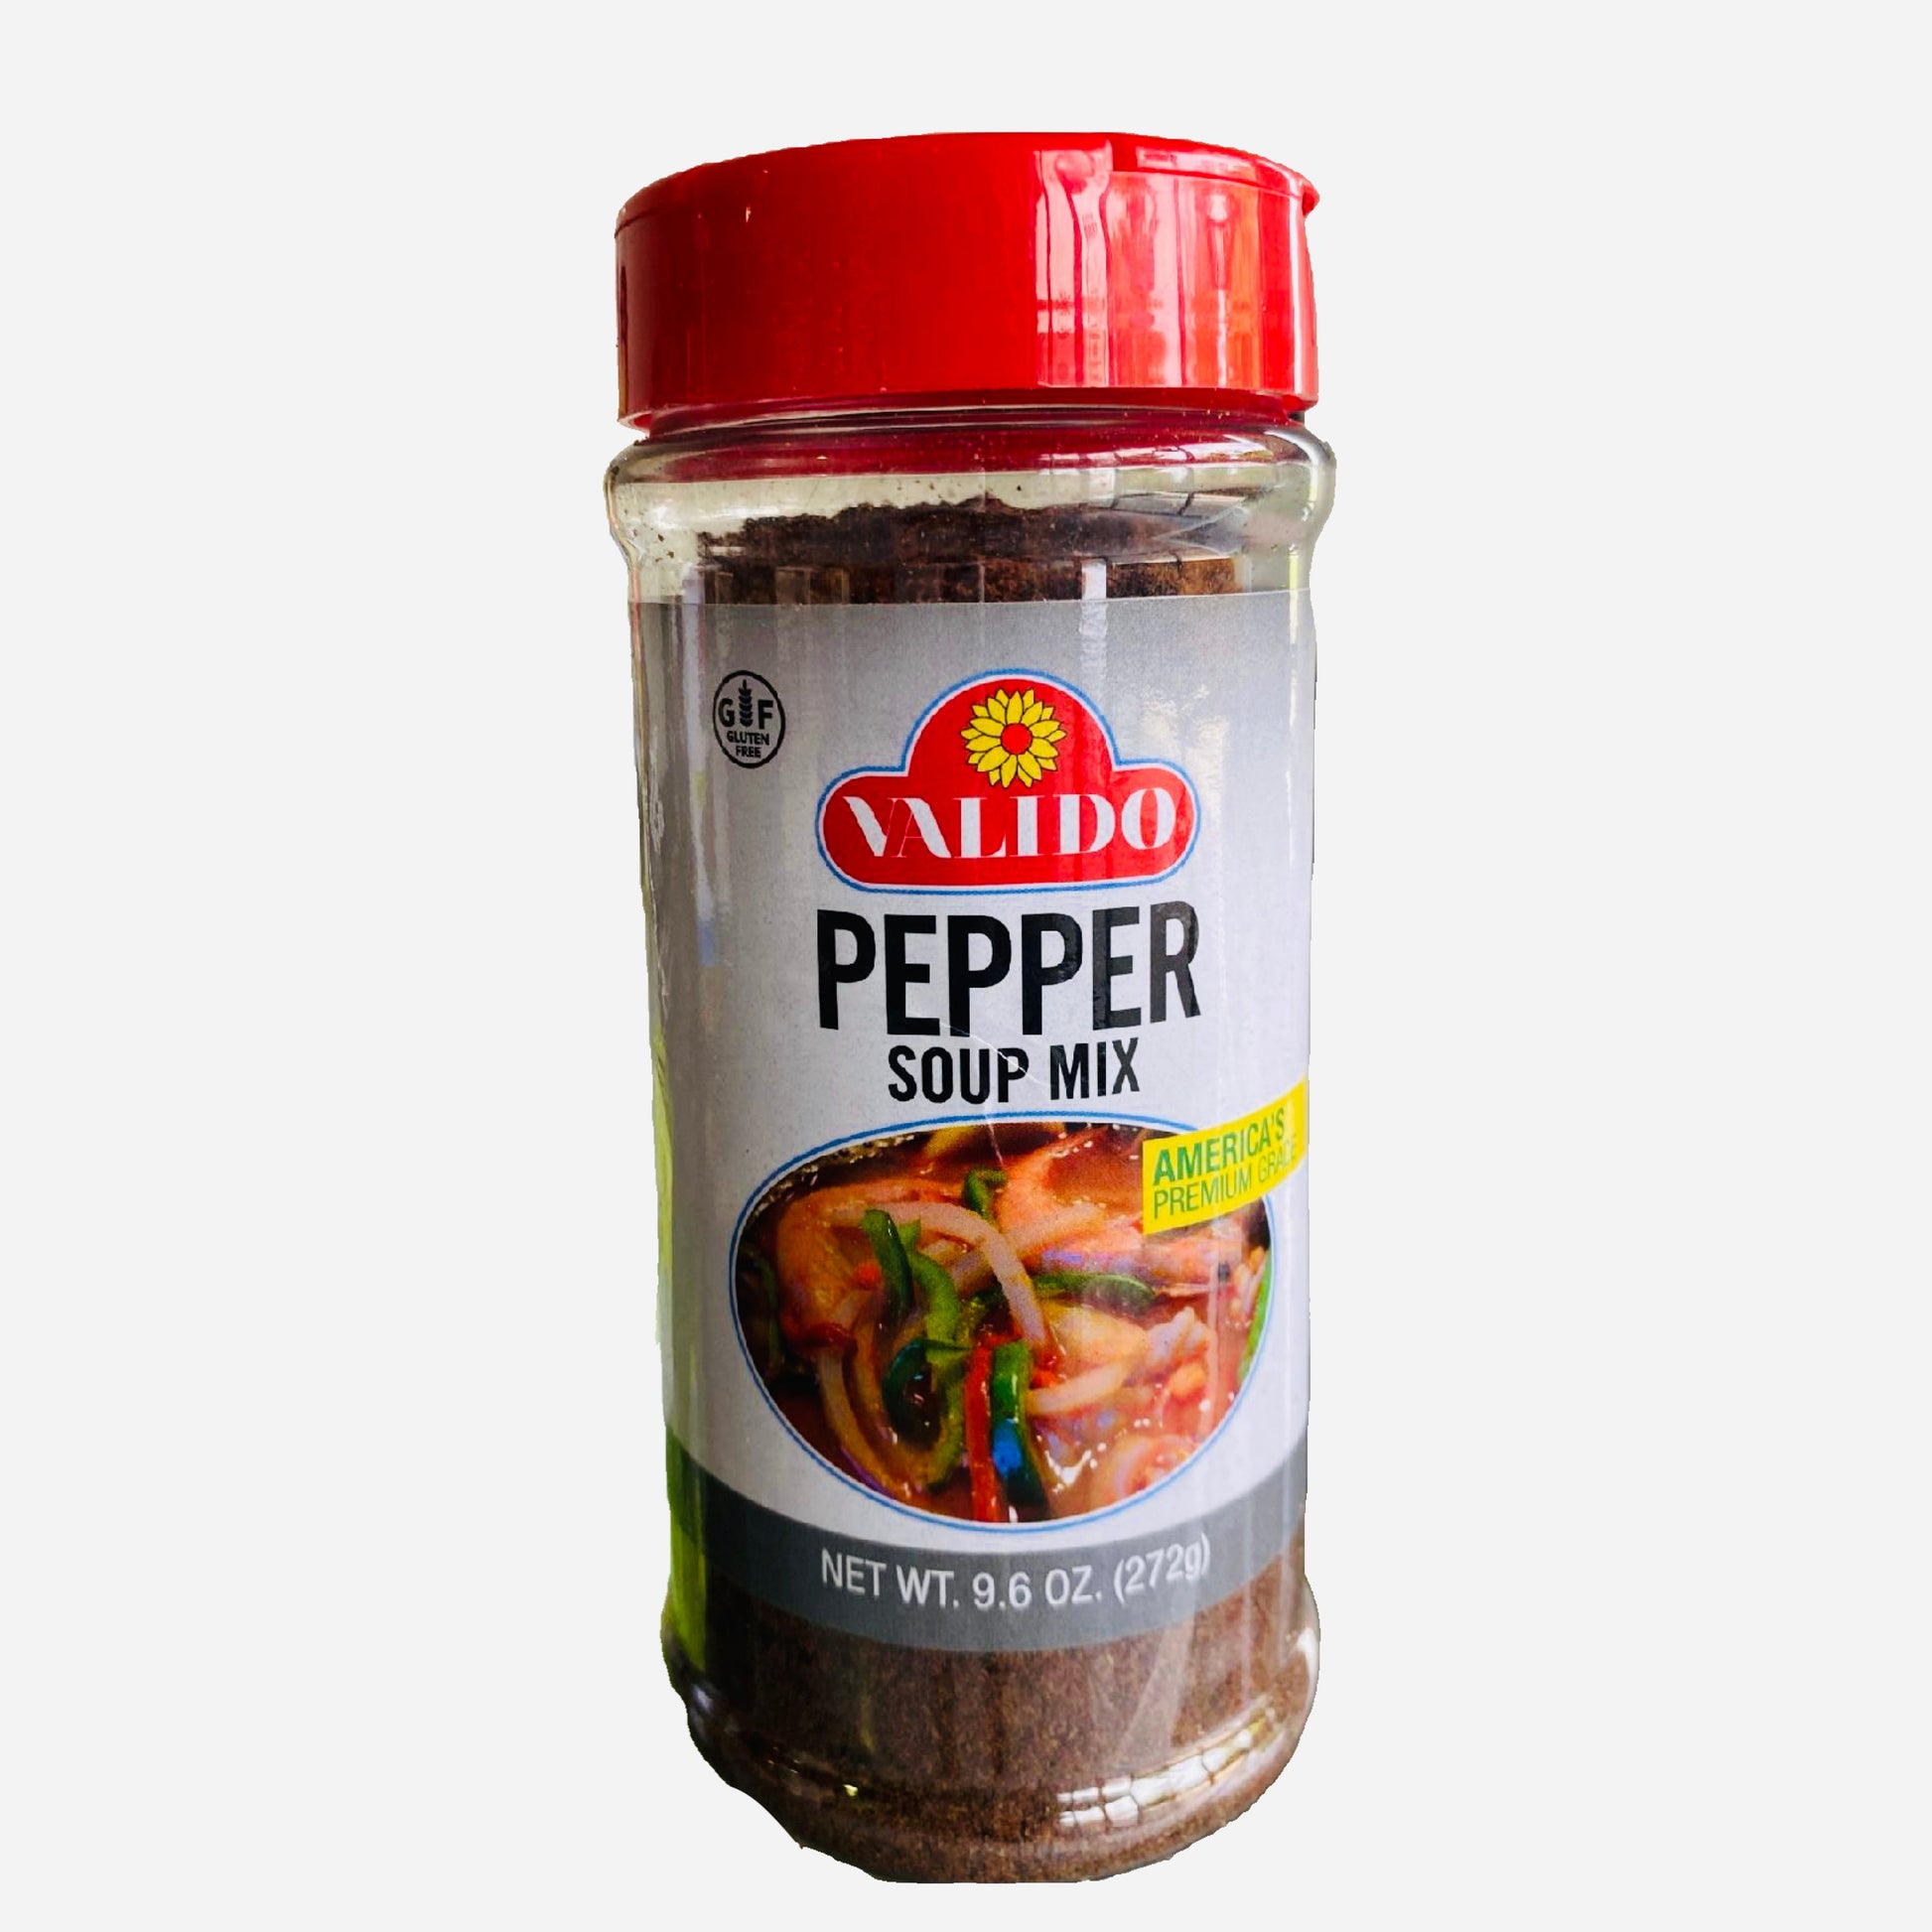 Valido Pepper Soup Mix 9.6oz - Break Stop